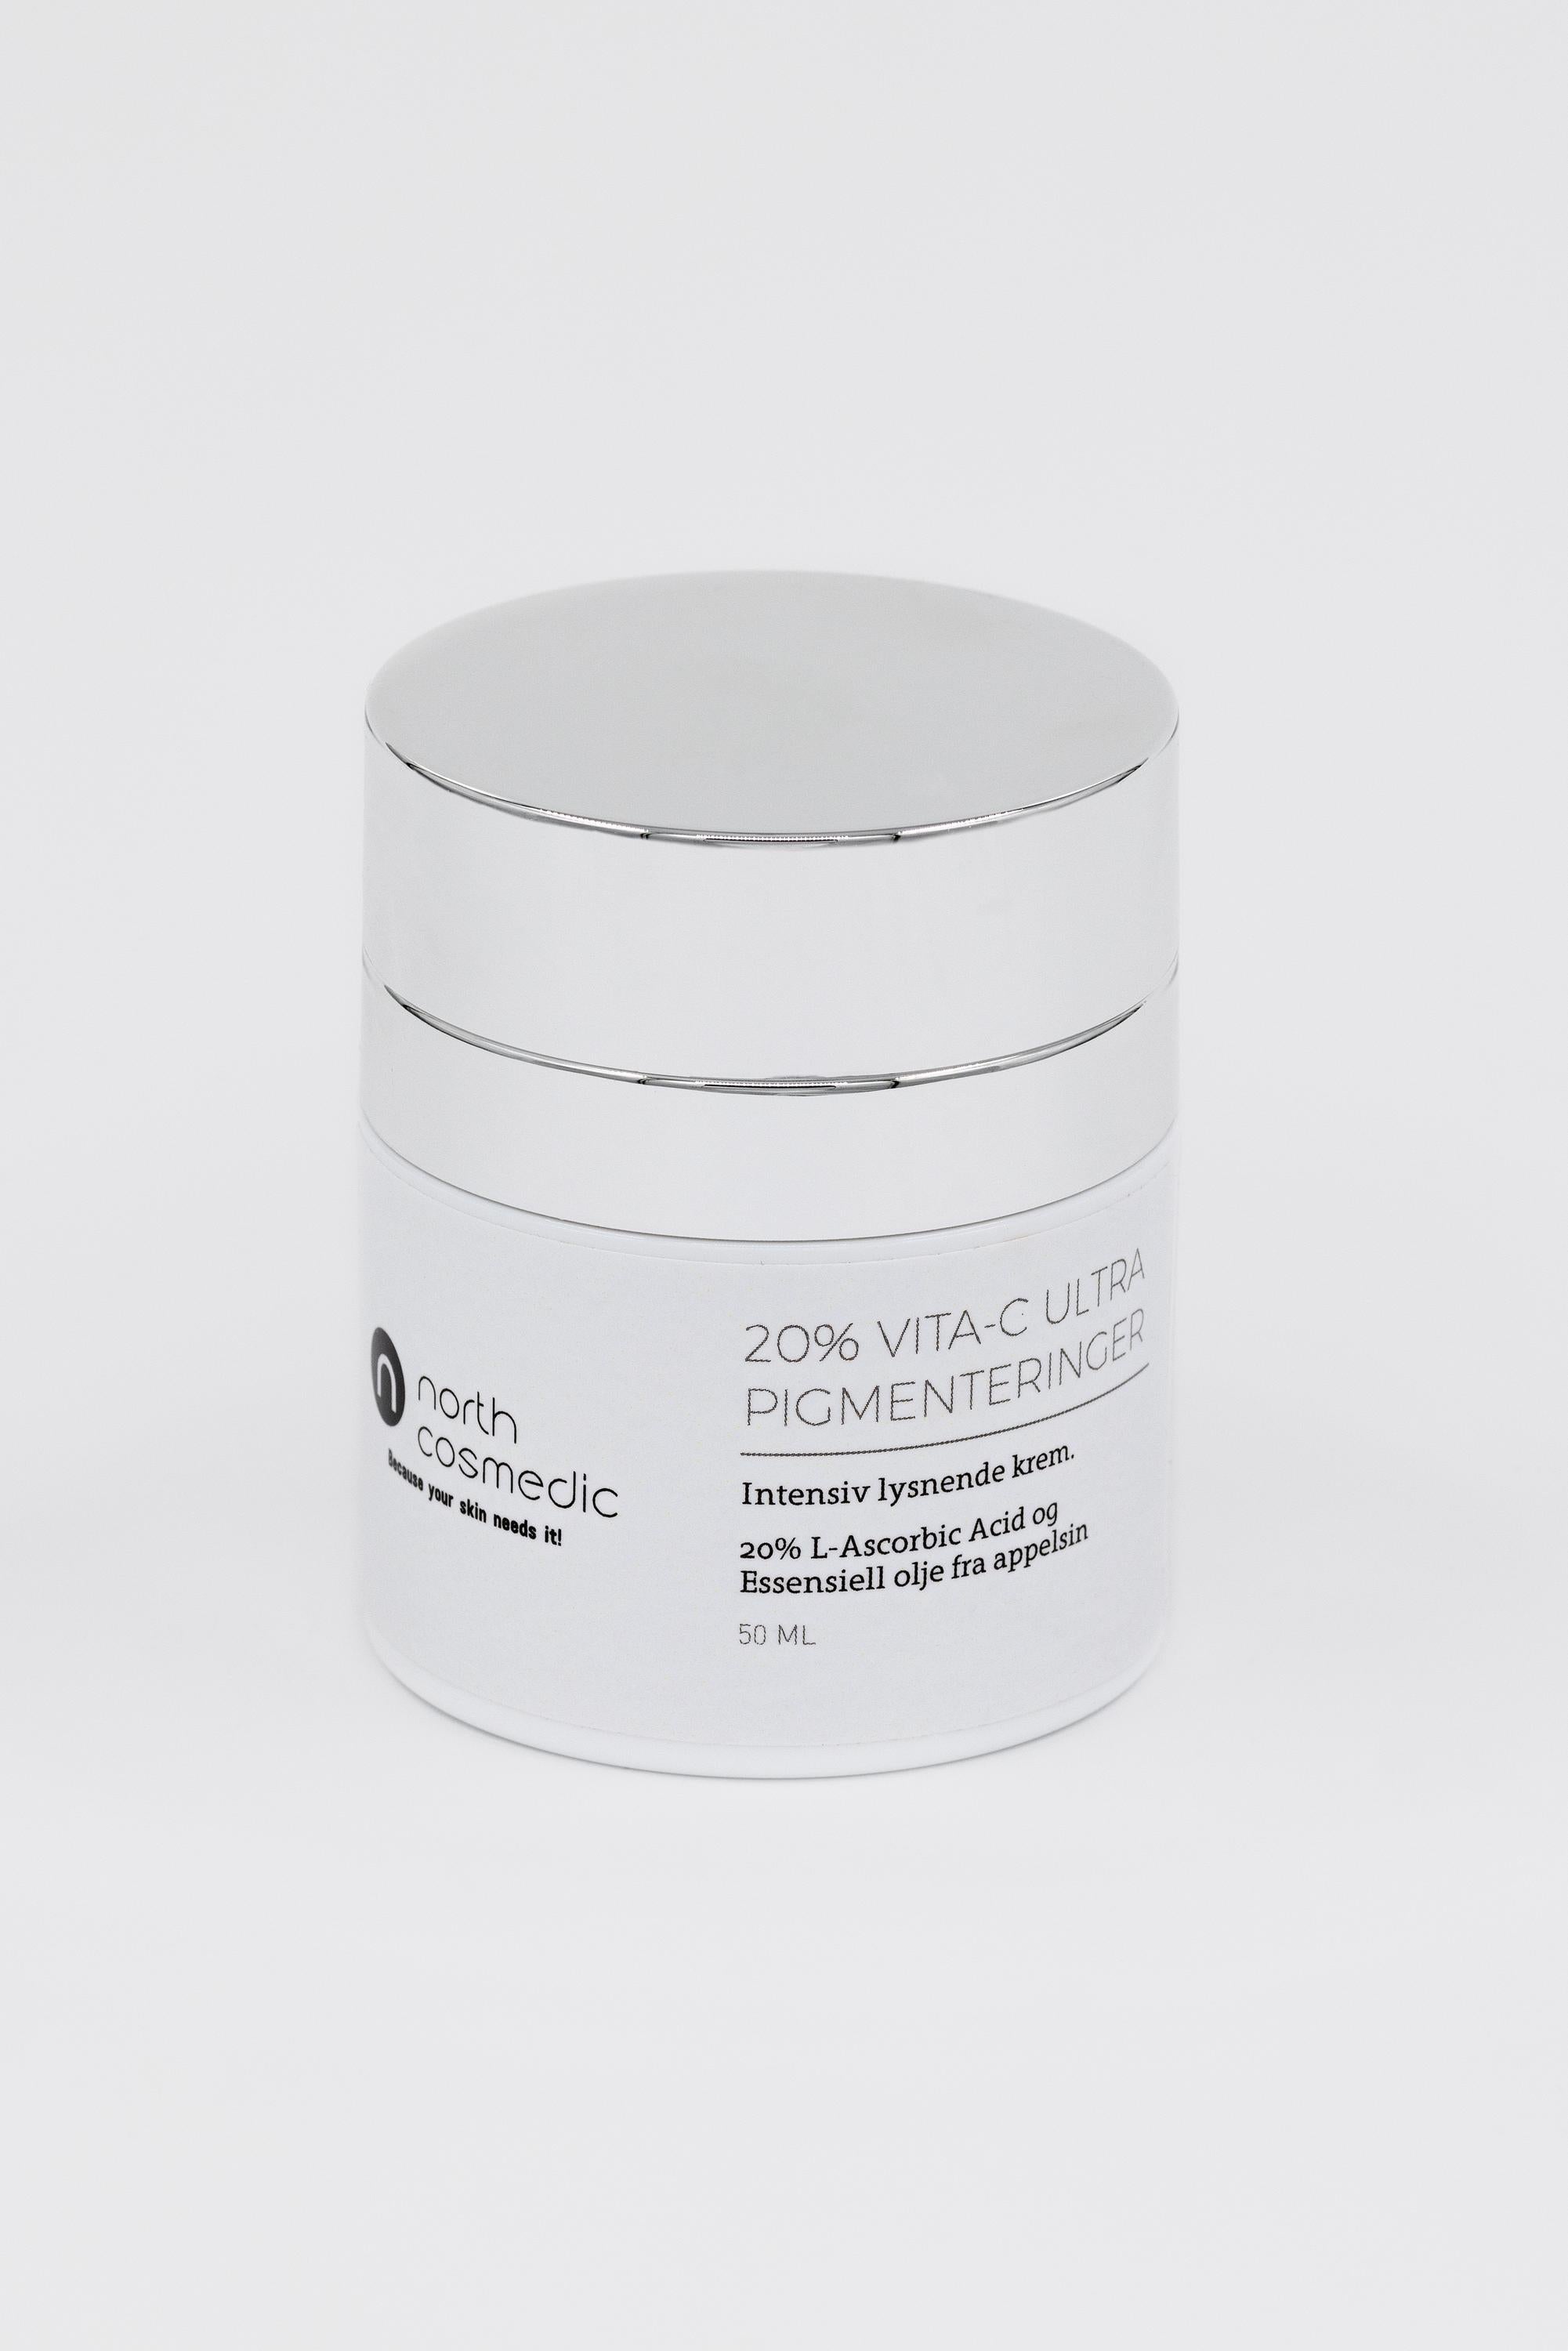 North Cosmedic 20% Vita-C Ultra pigmenteringer - www.Hudonline.no 